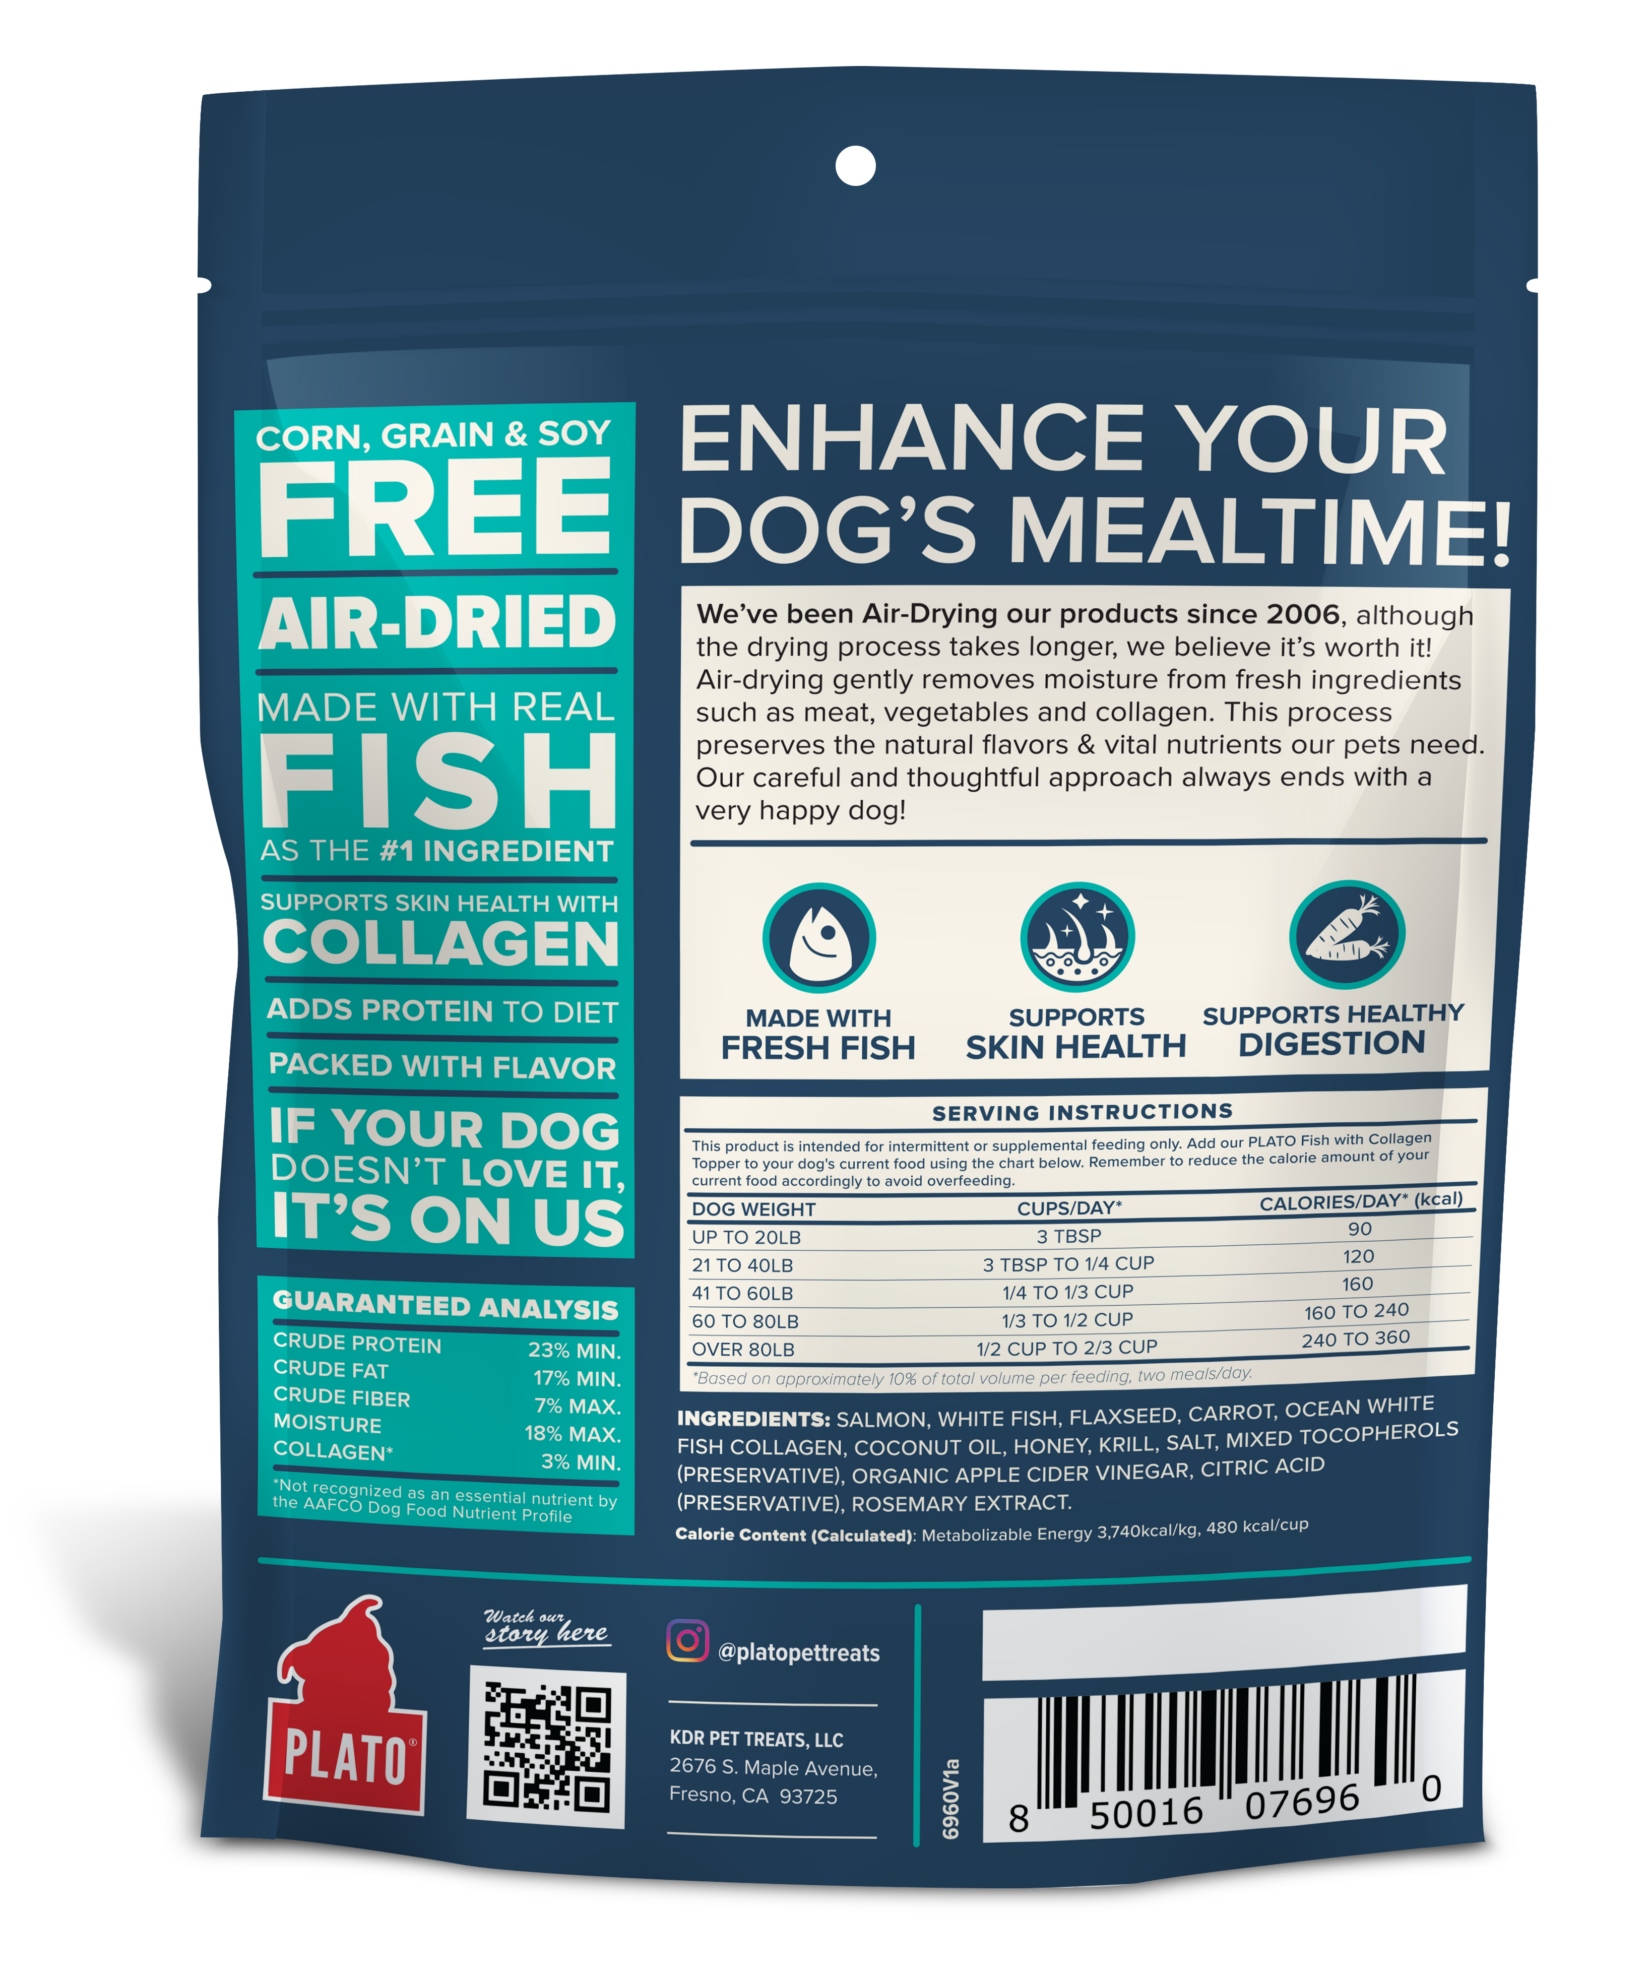 Plato Grain Free Air Dried Fish & Collagen Topper 5.5oz-Four Muddy Paws